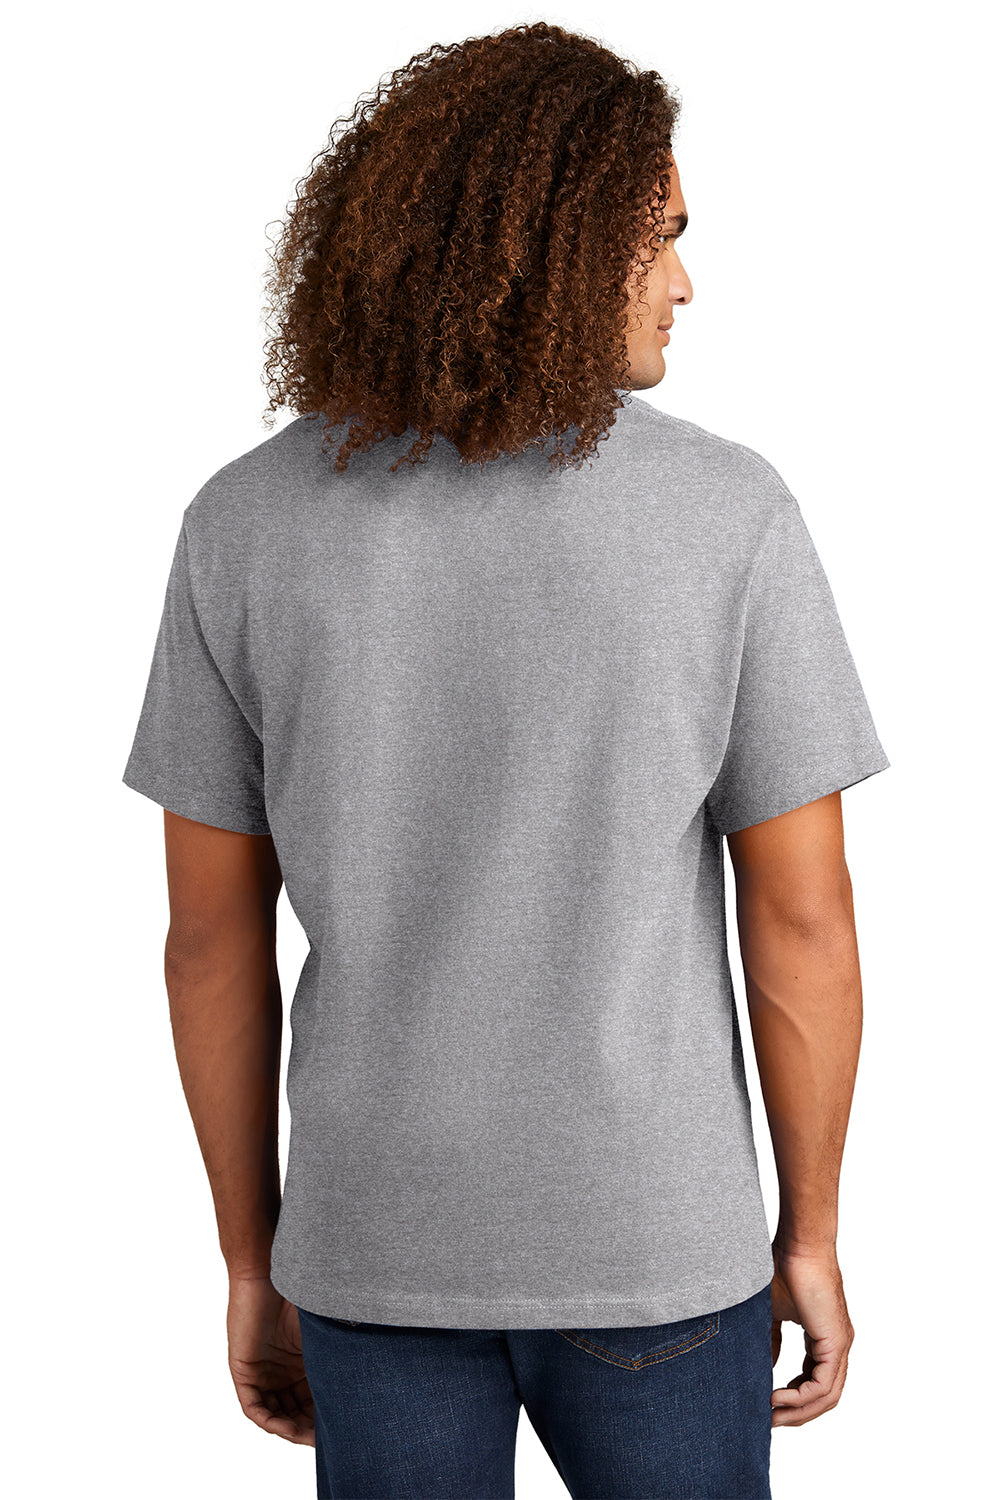 American Apparel 1301/AL1301 Mens Short Sleeve Crewneck T-Shirt Heather Grey Model Back